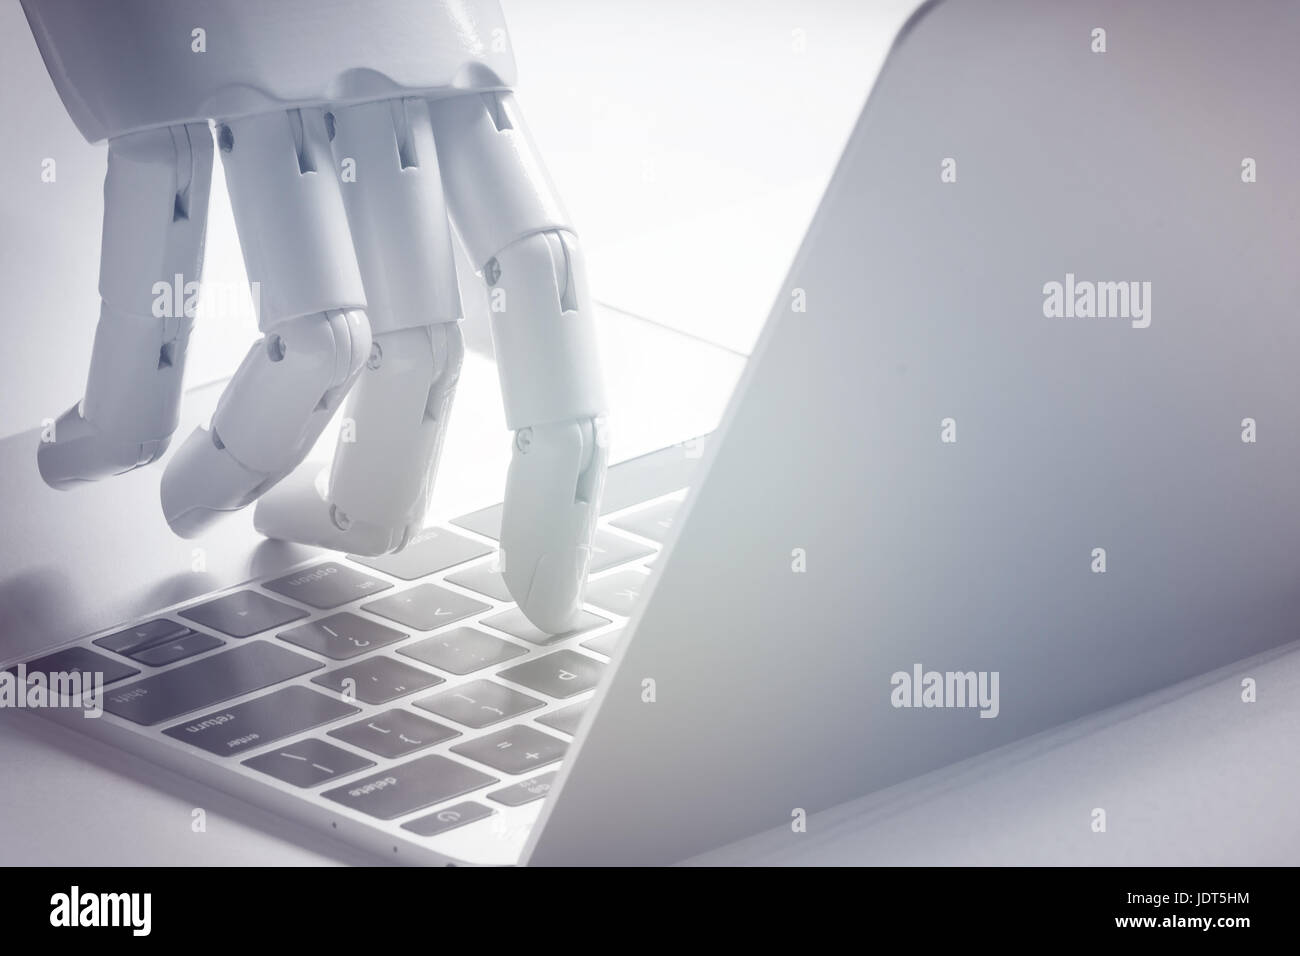 Artificial intelligence , robo advisor , chabot , robotic concept. Robot finger point to laptop button. Stock Photo